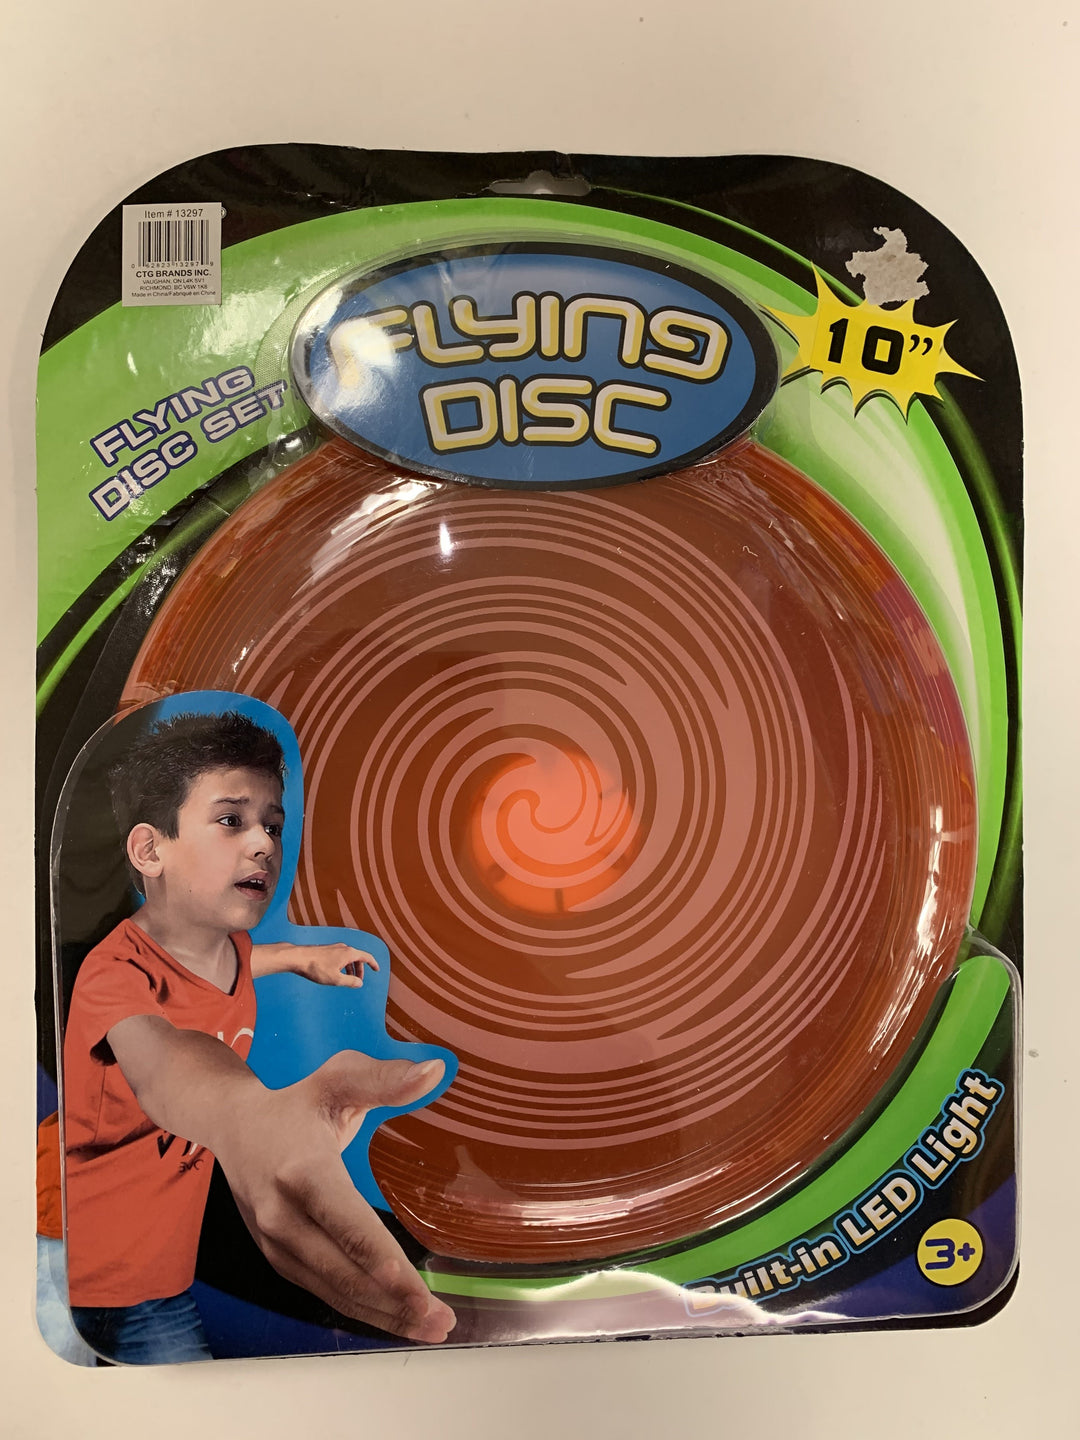 LED Flying Disc